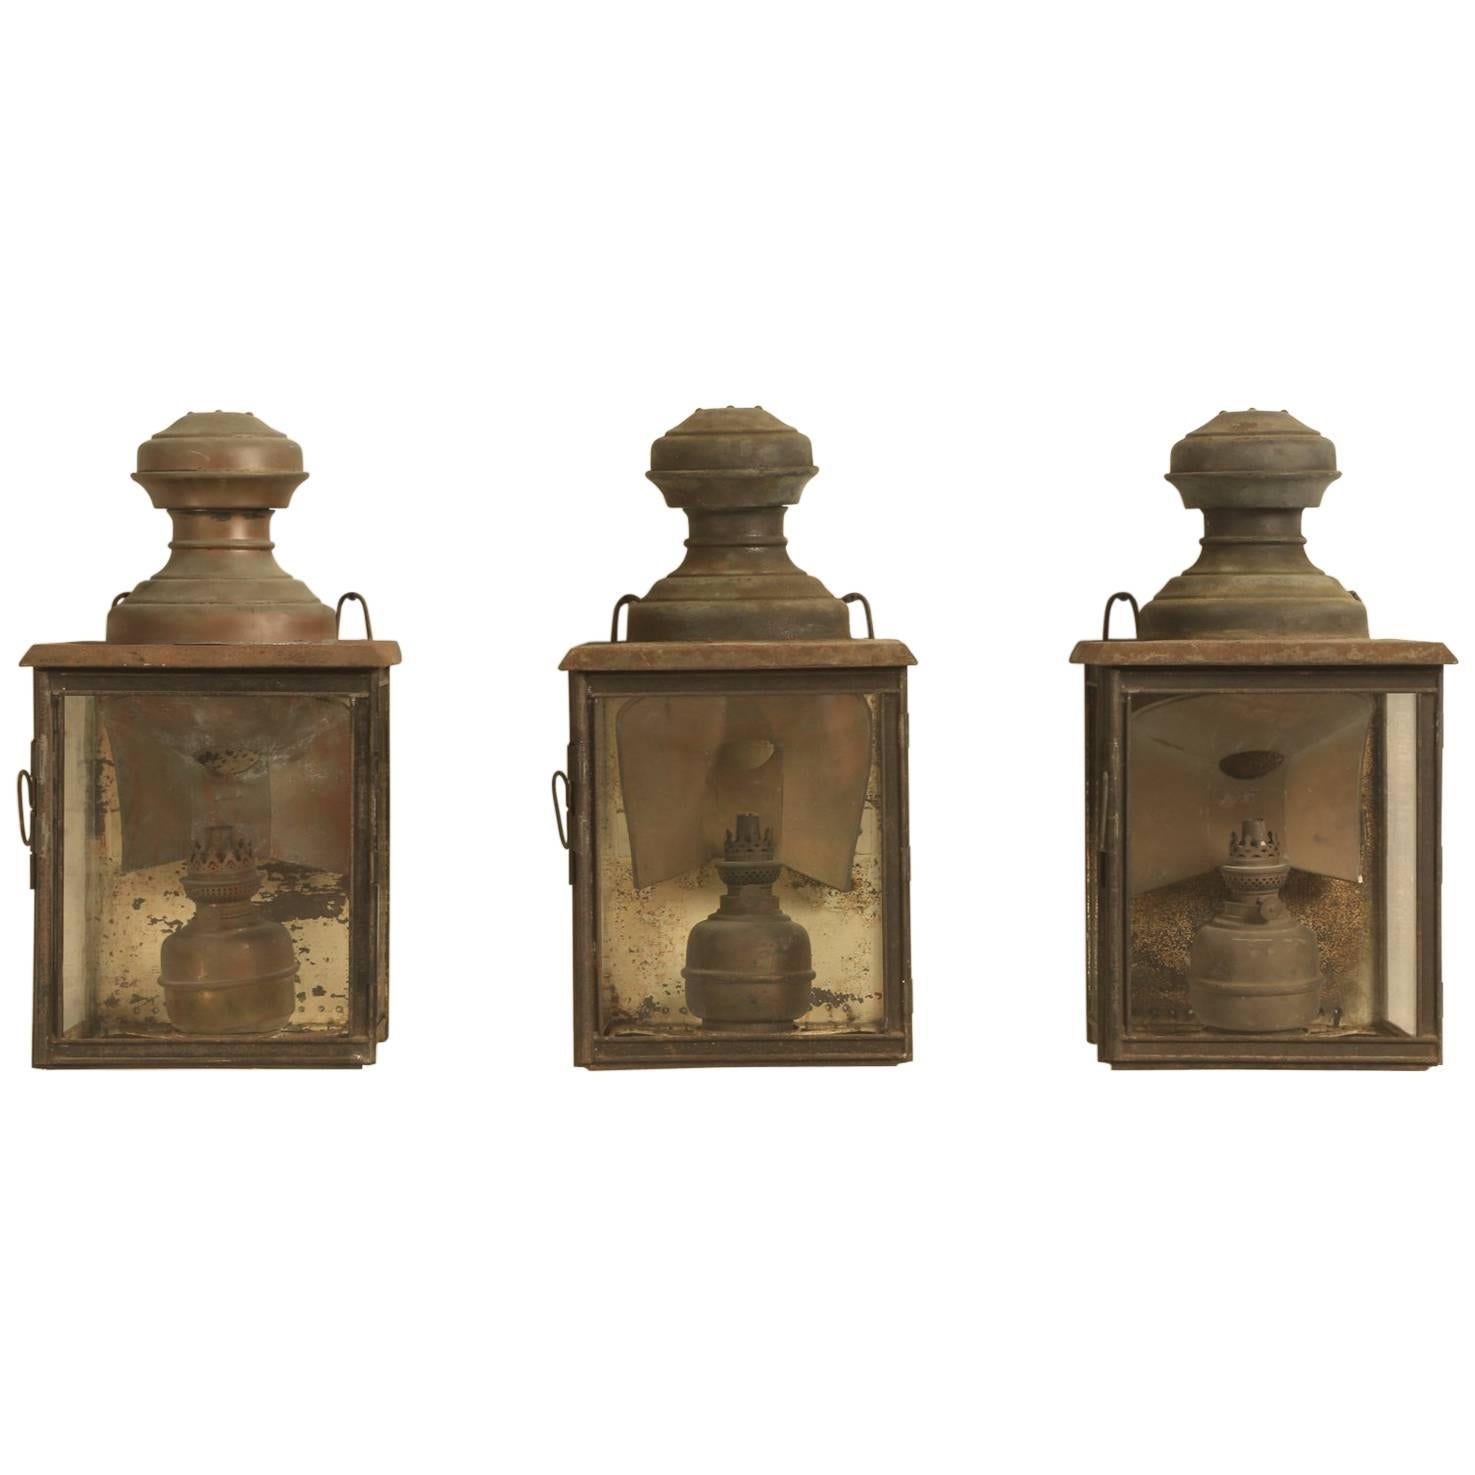 Antique French Gillet & Forest Kerosene Lanterns from the 1800s